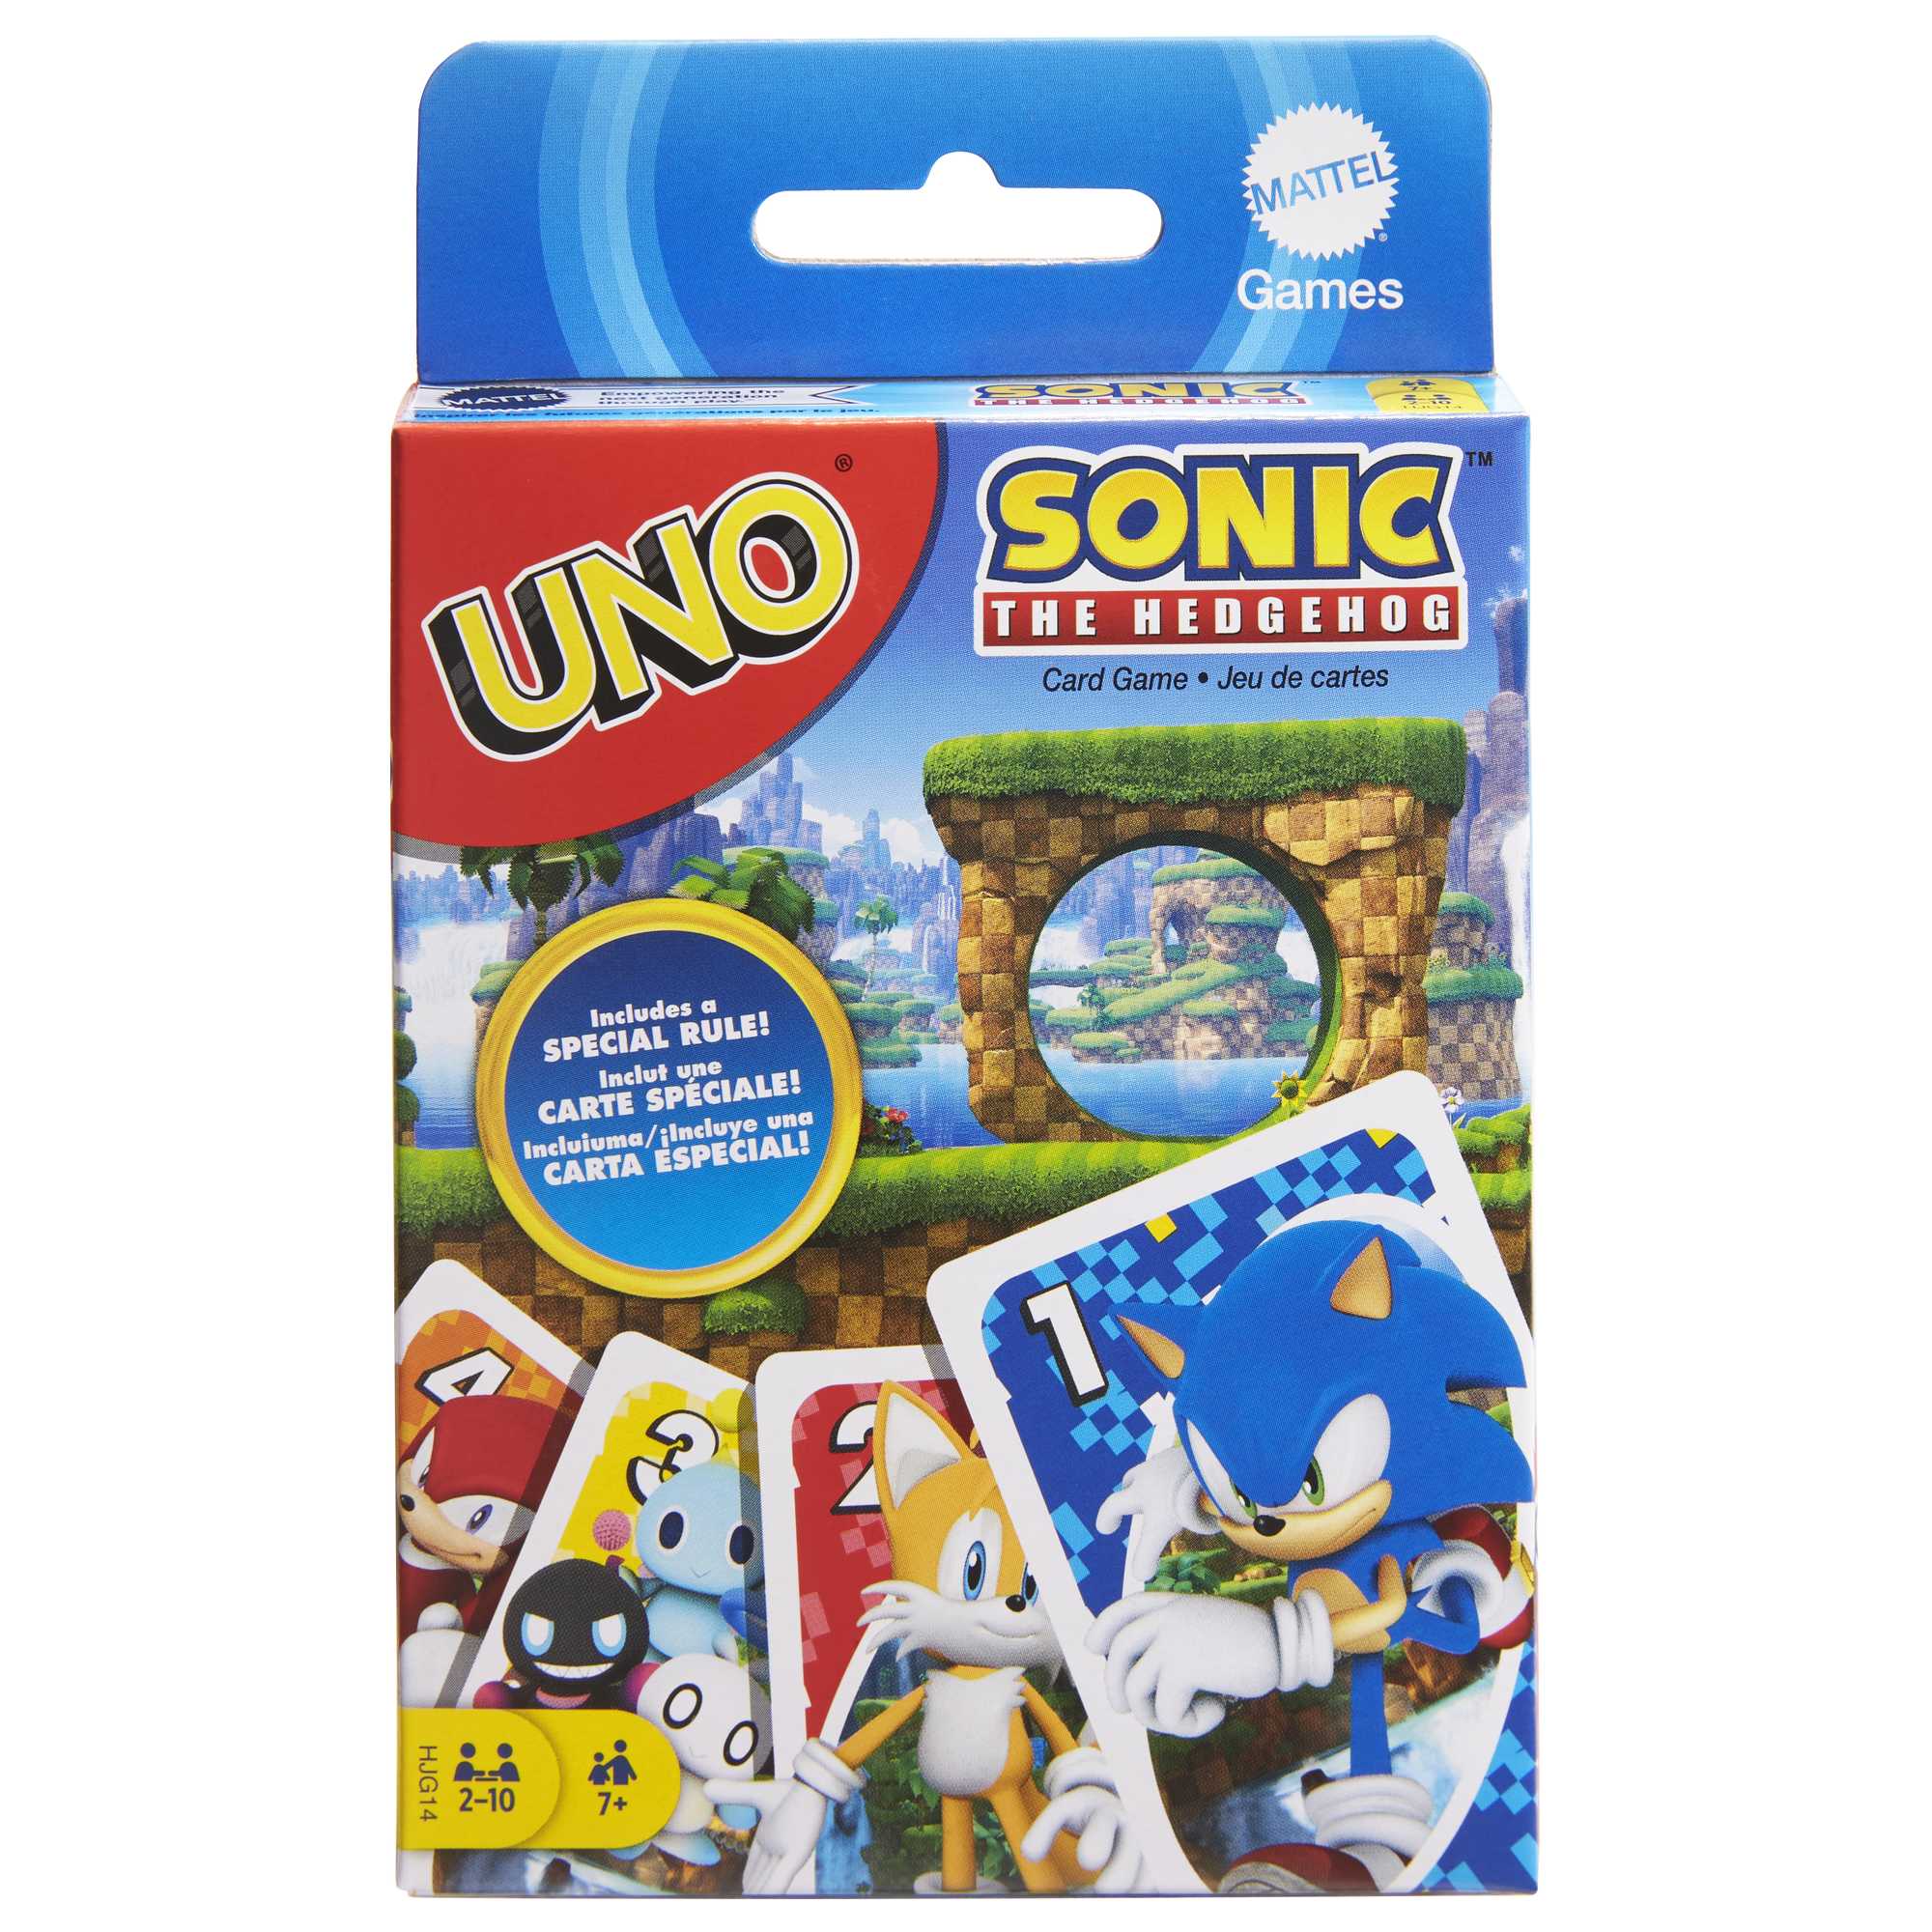 UNO Sonic The Hedgehog